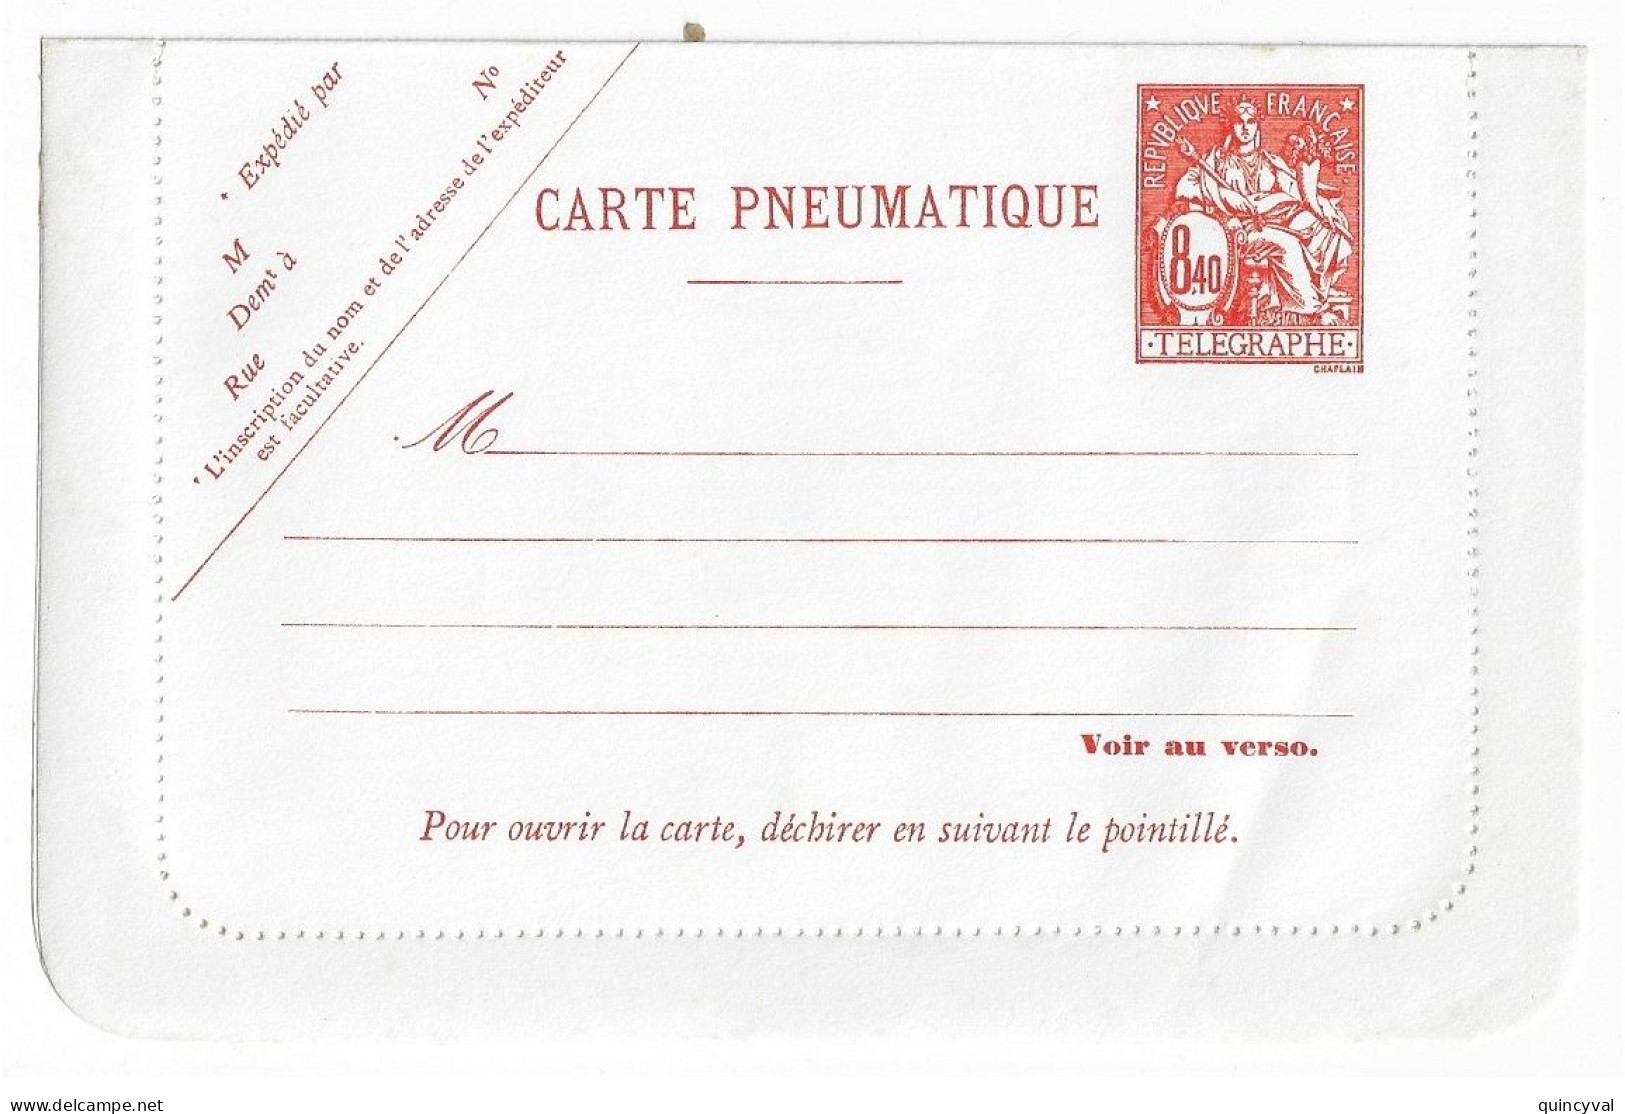 PARIS Carte Lettre Pneumatique CHAPLAIN 8,40 F Tarif 1977 Neuf Yv 2623 CLPP 8,40 F Storch V16 - Pneumatische Post